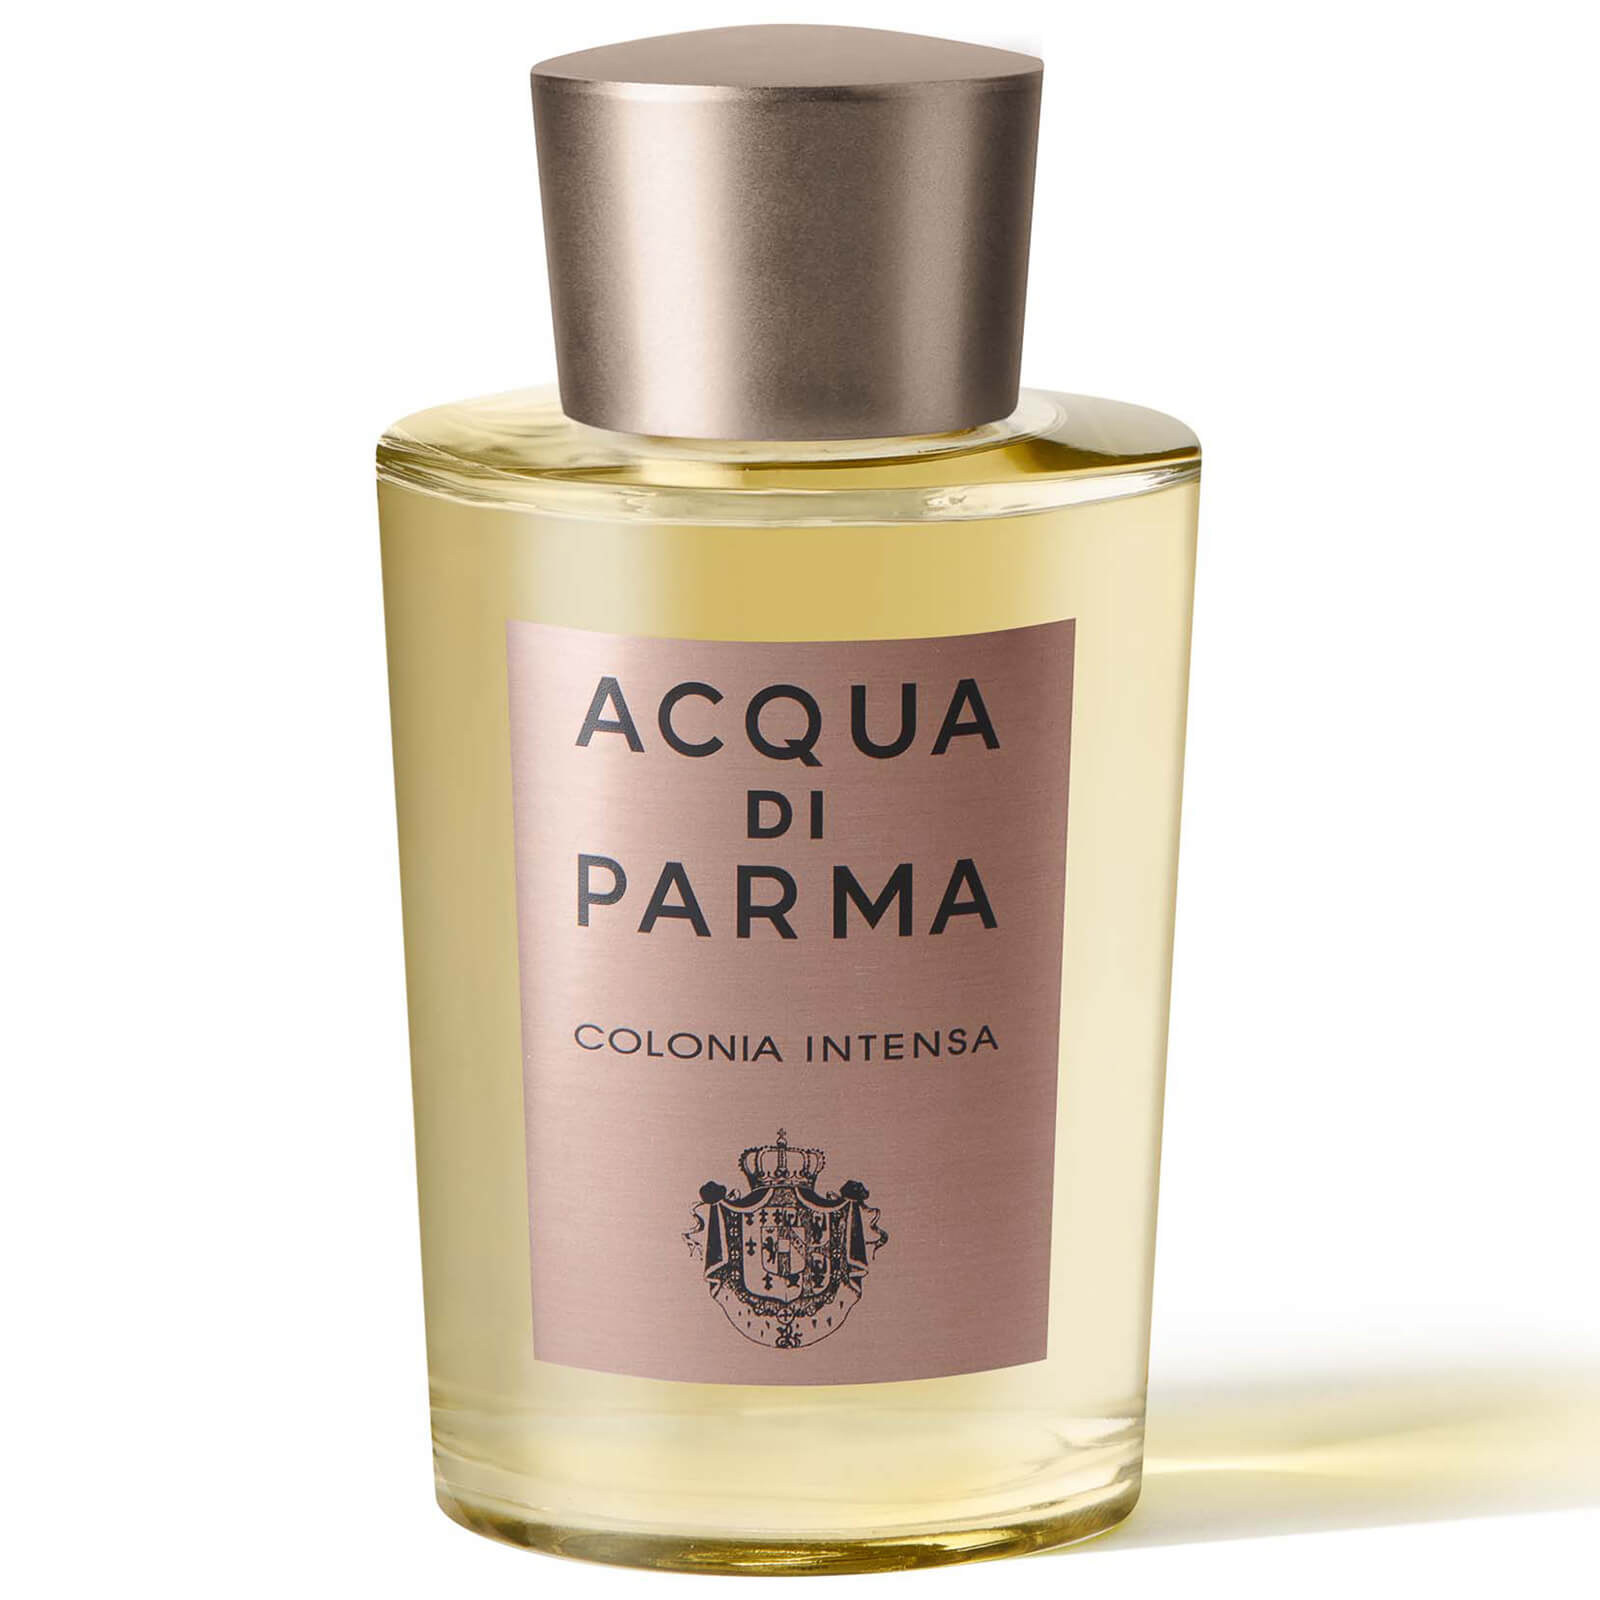 Photos - Women's Fragrance Acqua di Parma Colonia Intensa Eau de Cologne 180ml 